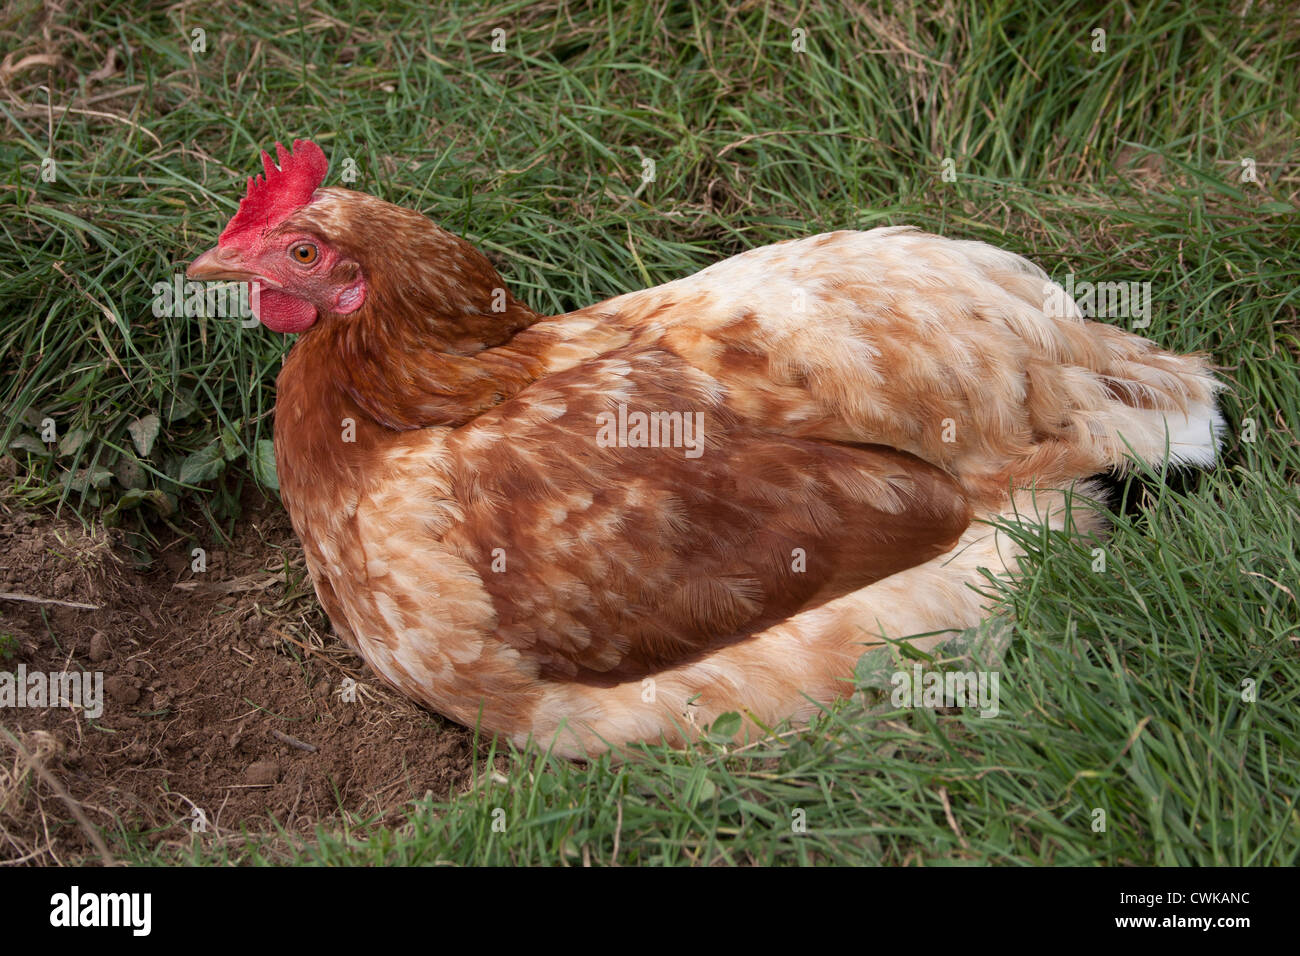 Huhn mit Staub Bad Stockfoto